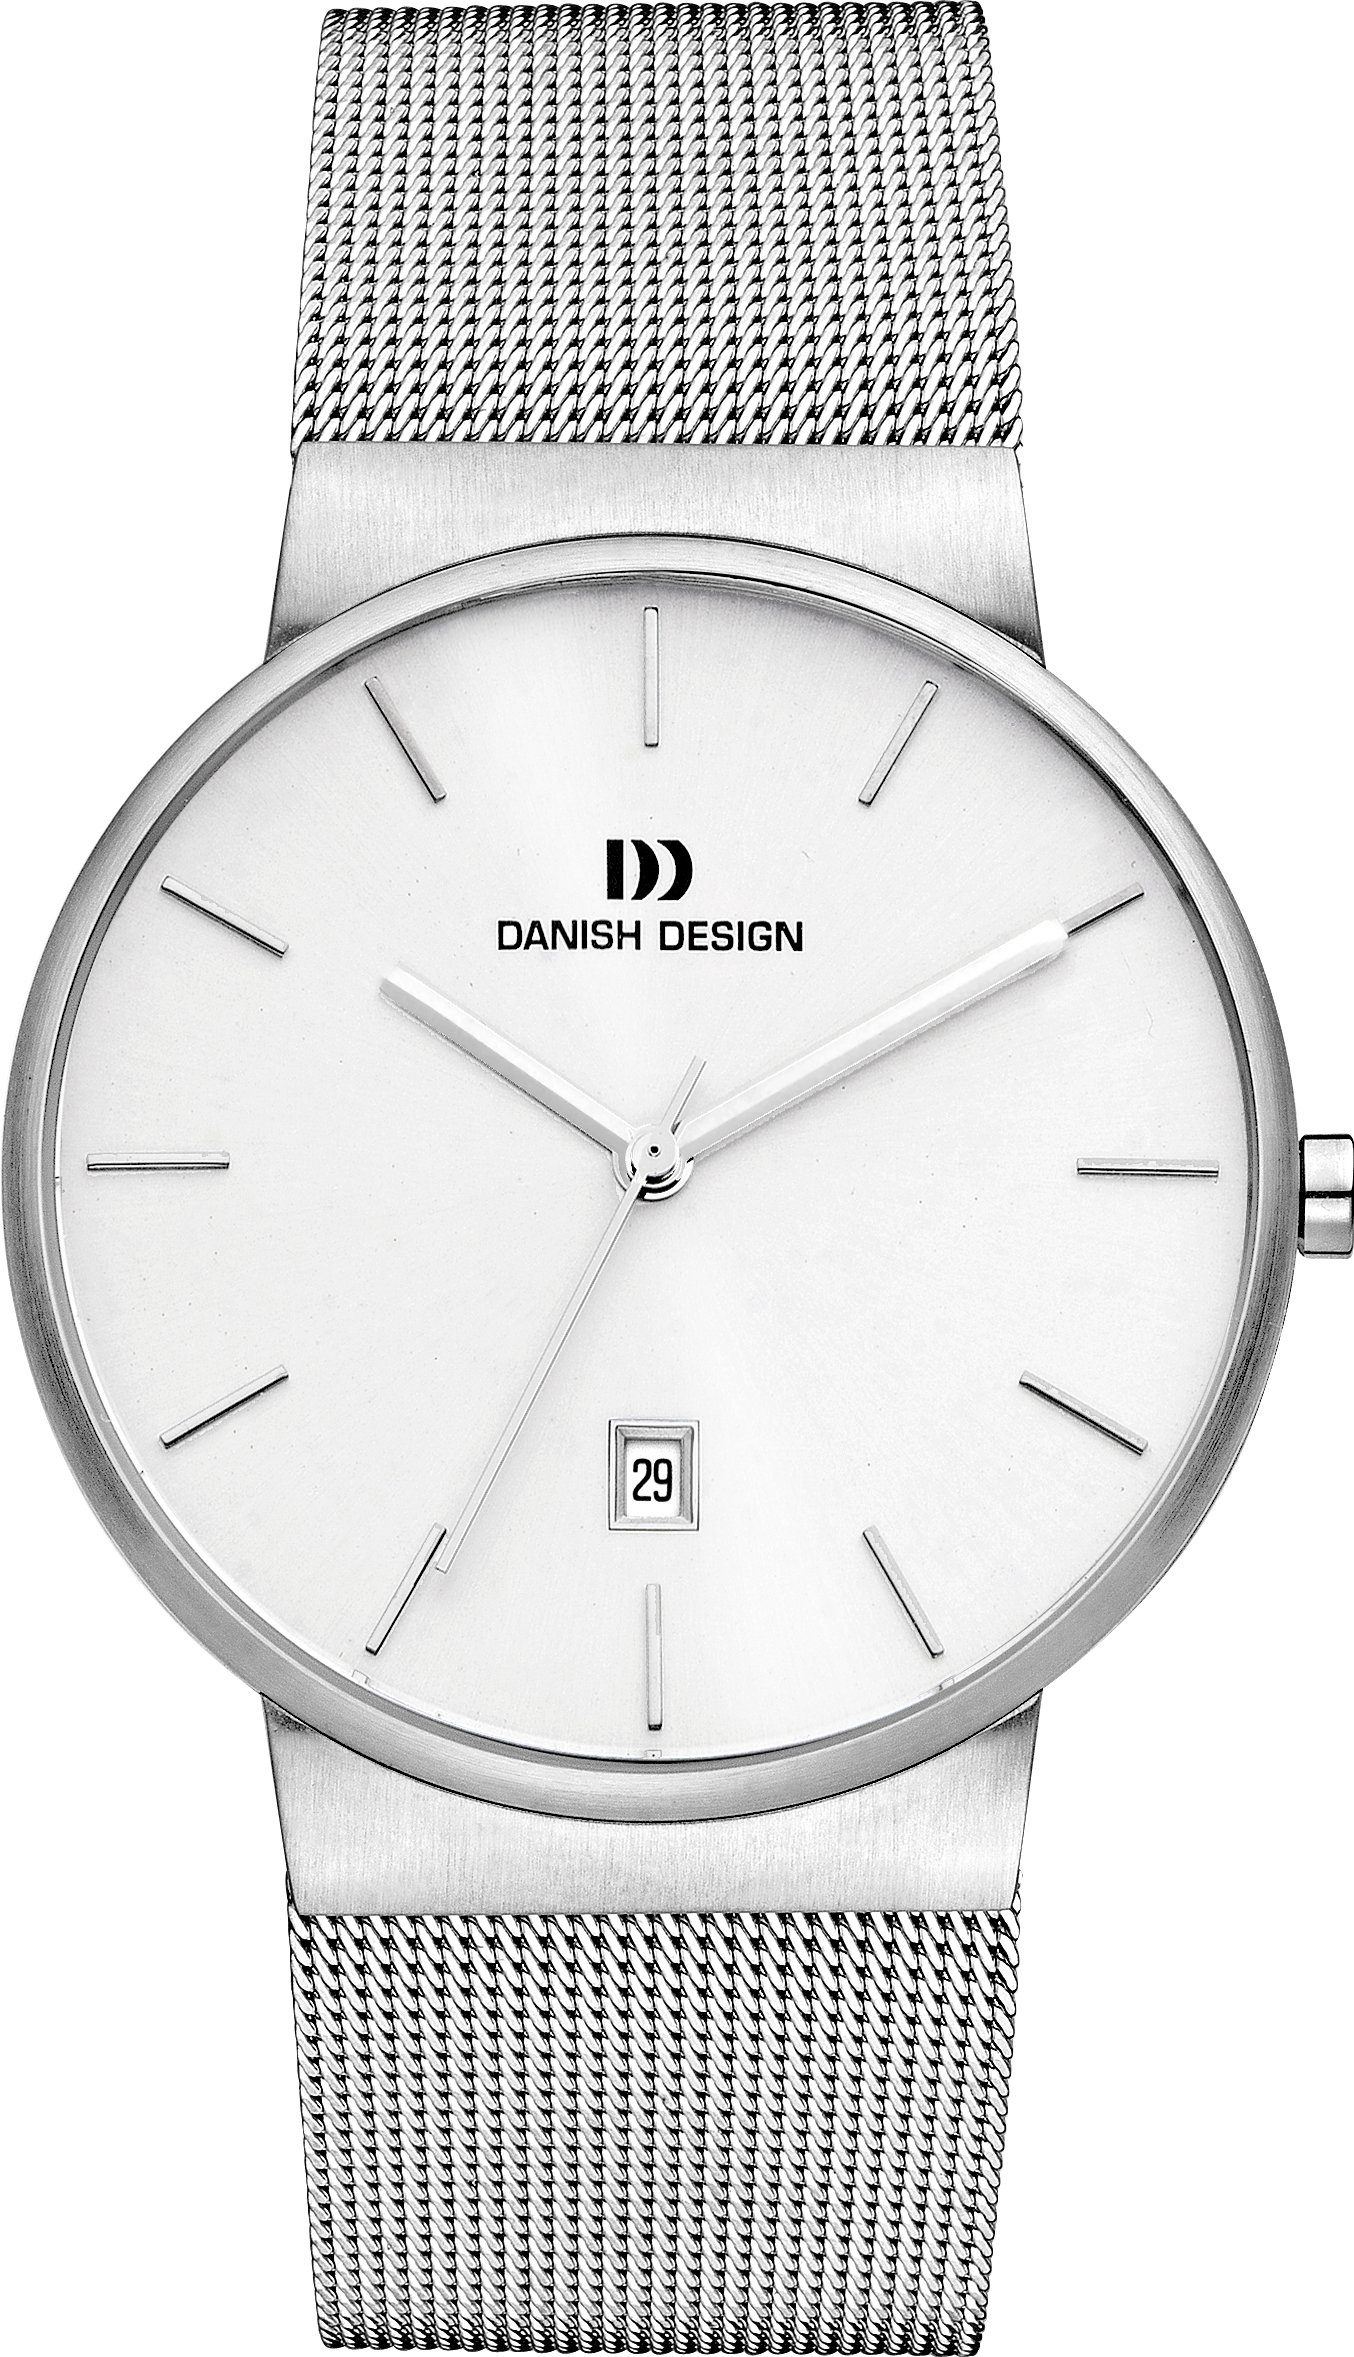 Danish Design Quarzuhr Designuhr Herren Silber Datum TAGE Datum 6 bei 40mm, Uhr mit